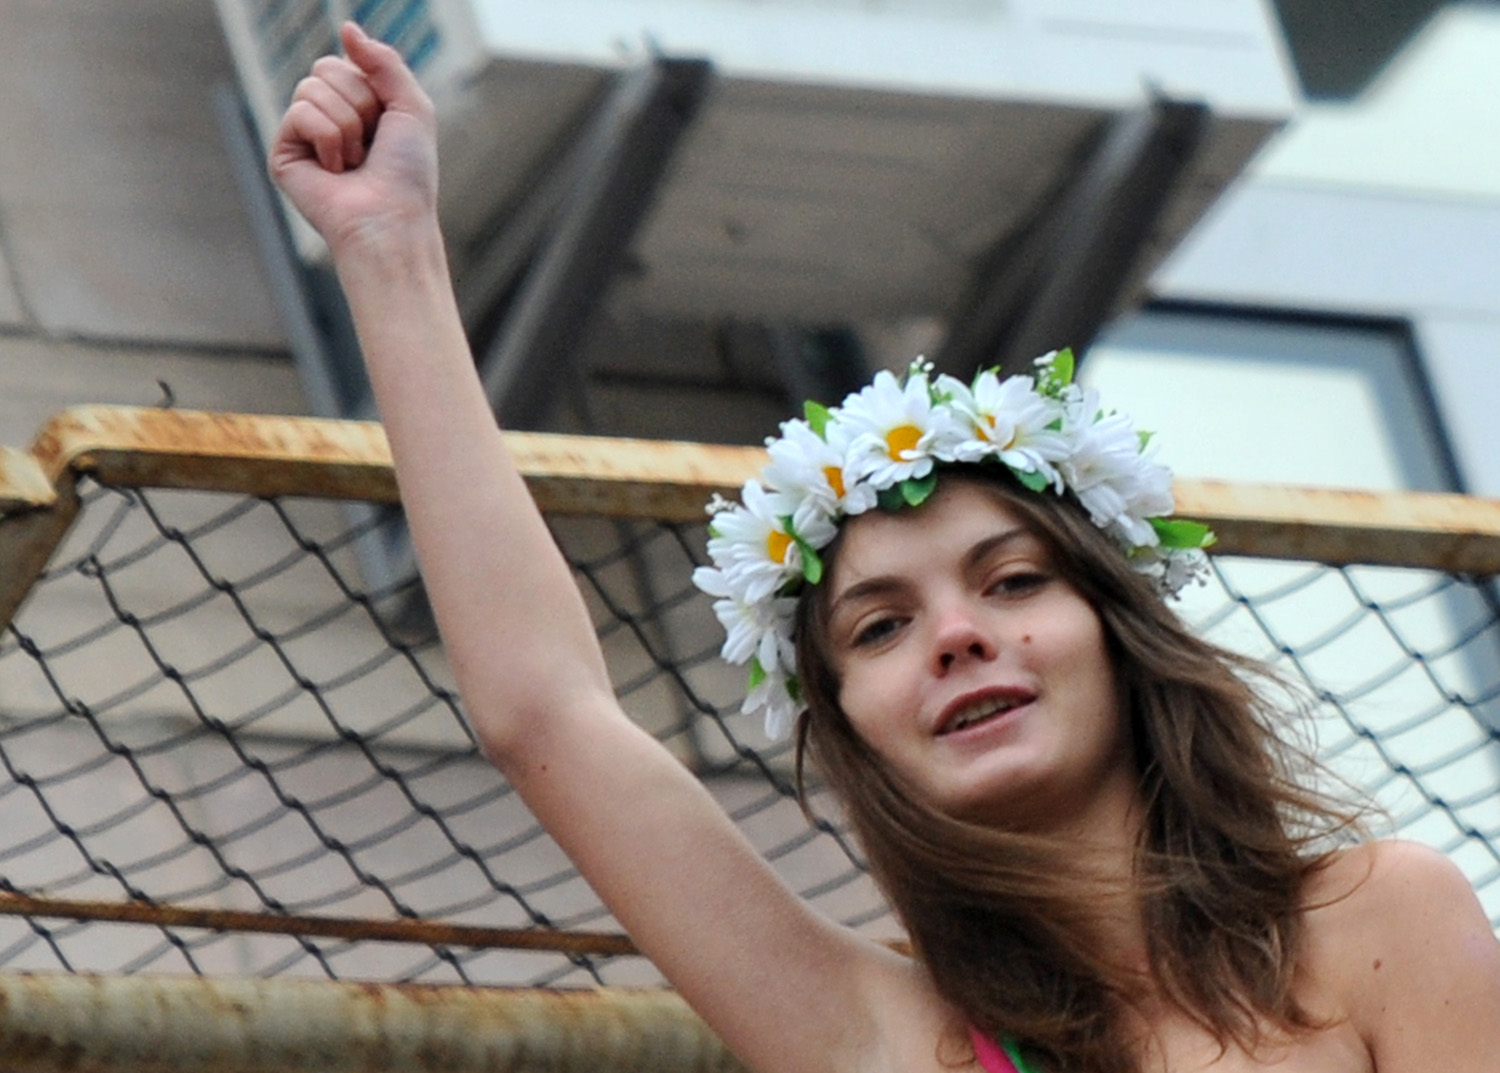 Hallan muerta en París a cofundadora del grupo feminista Femen